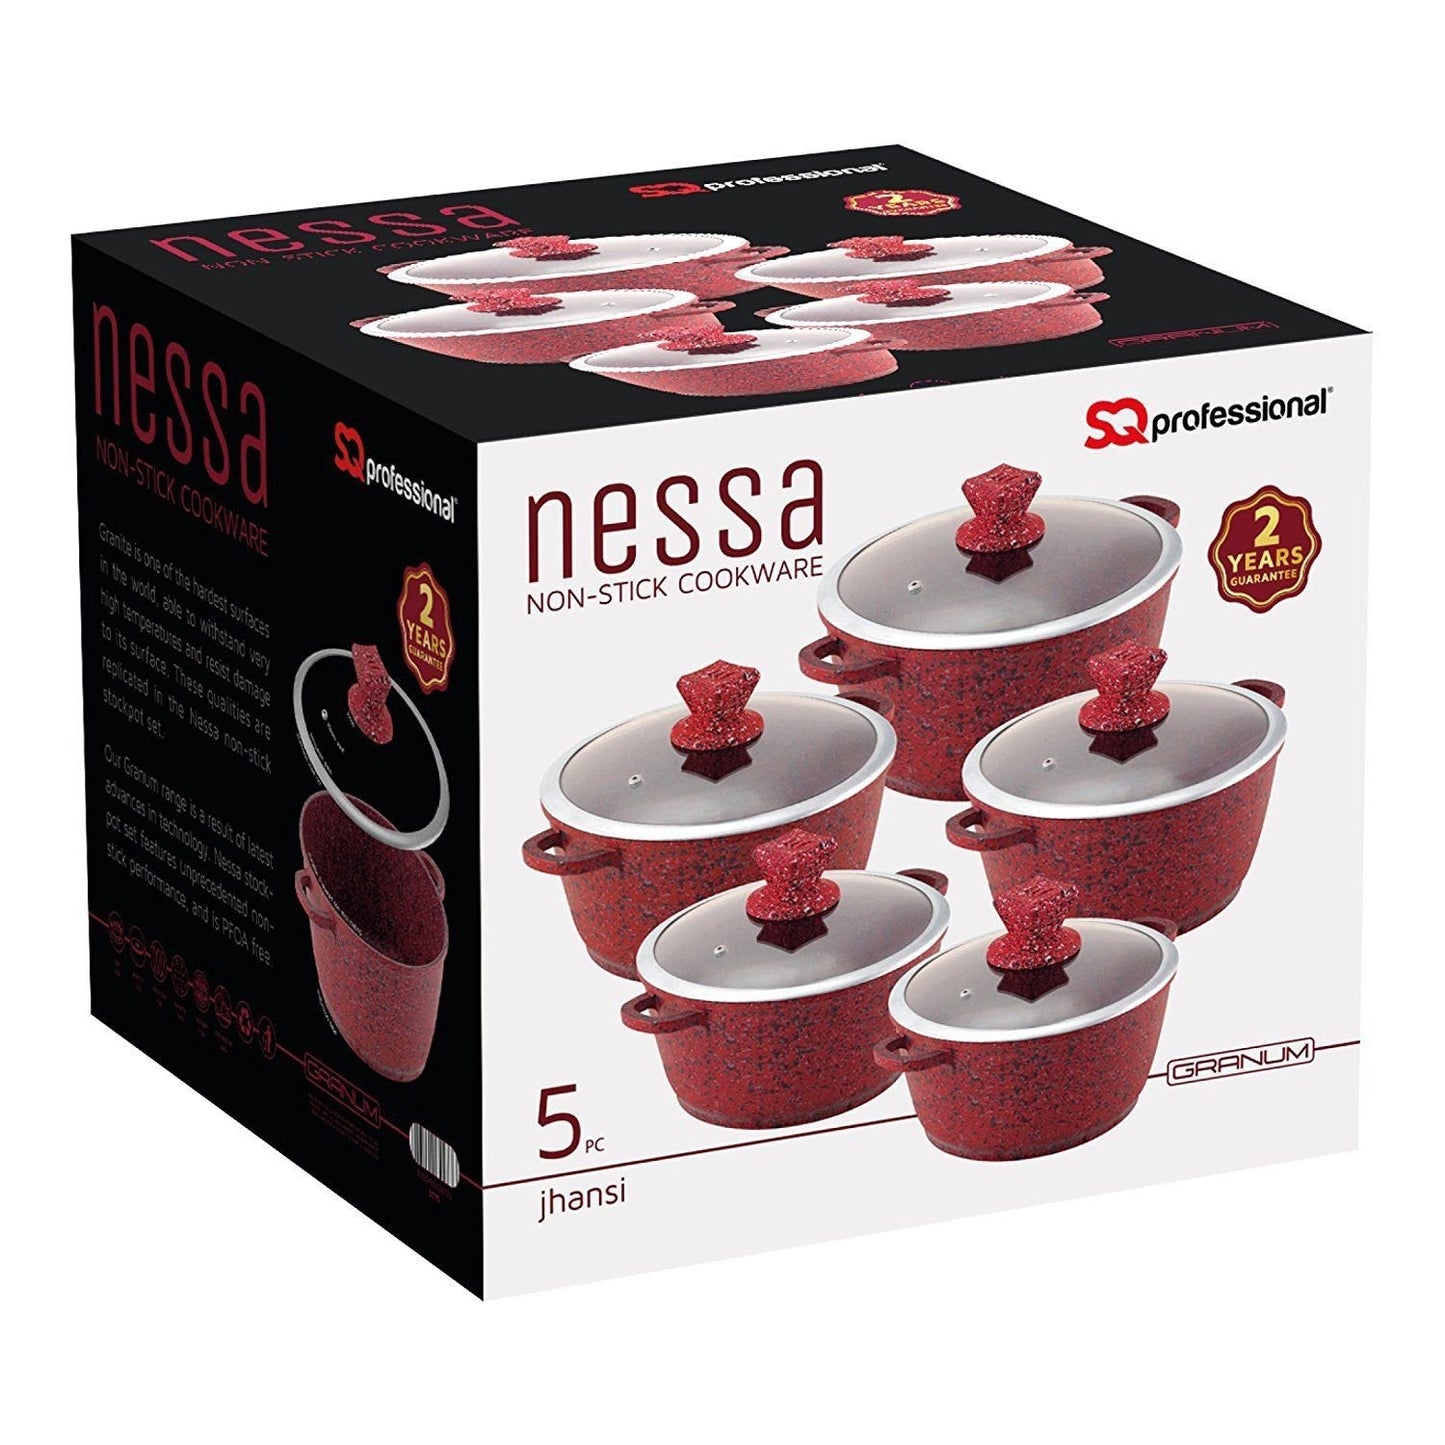 Nessa Granum Casserole Set 5Pc Jhansi Red Home Kitchen 2473/5775 (Big Parcel Rate)